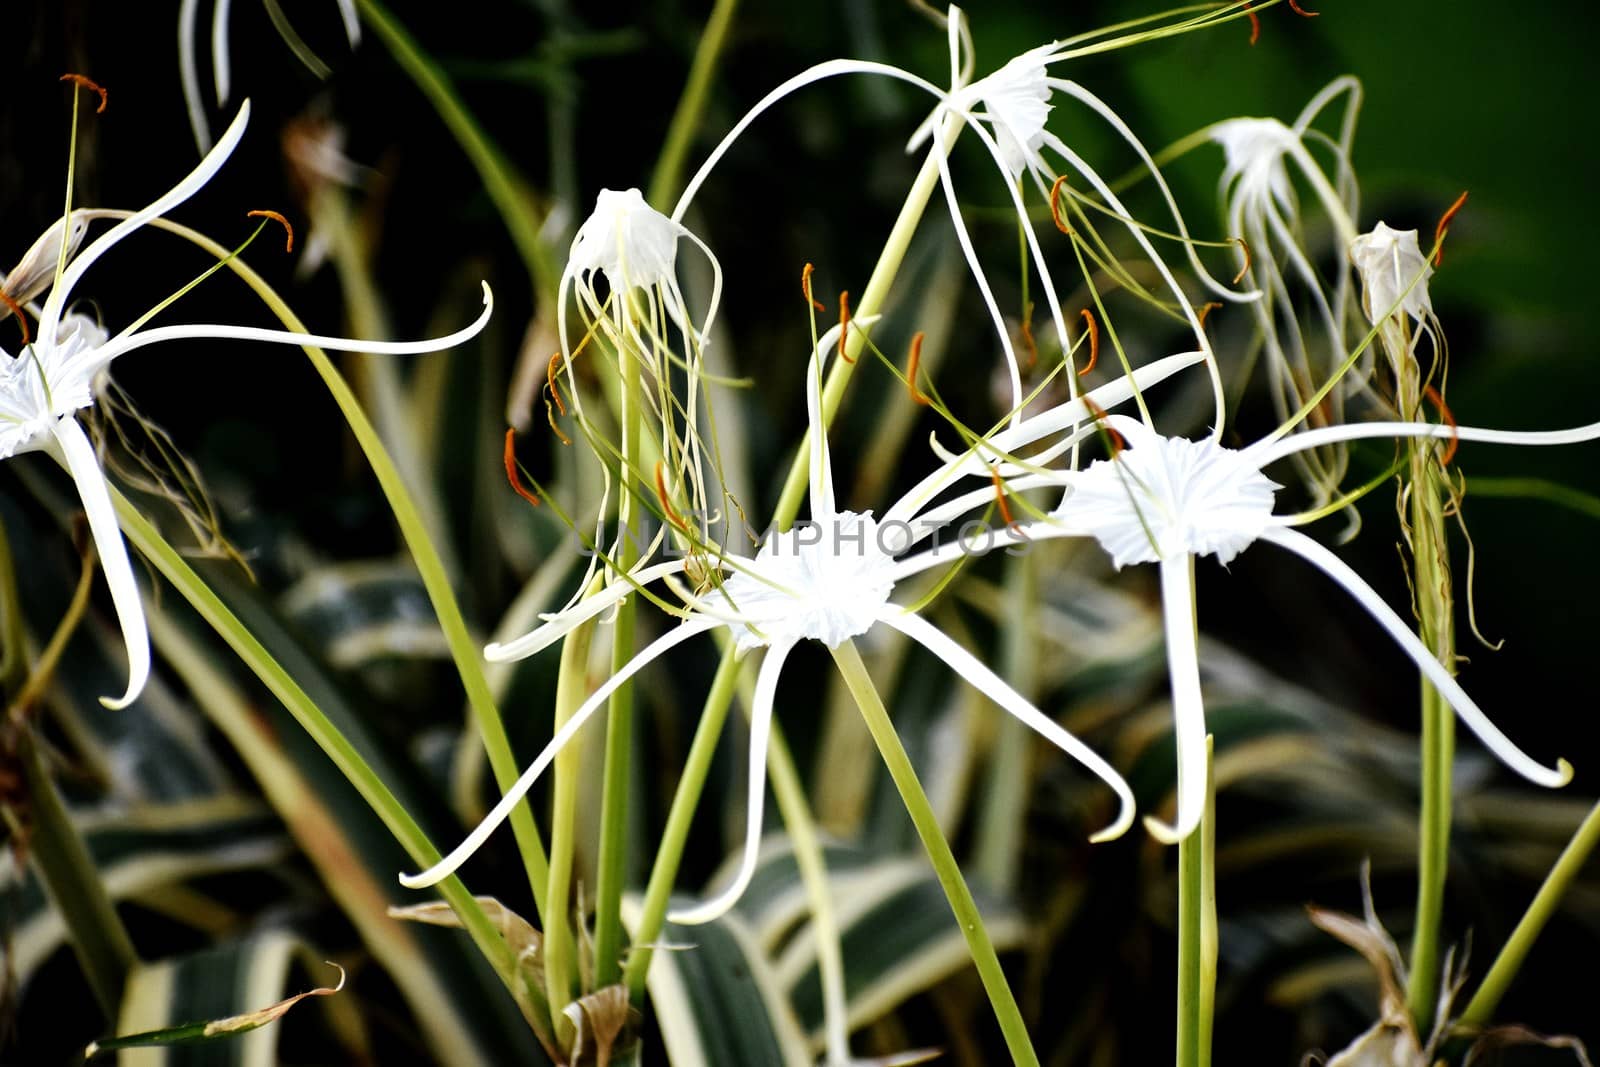 White flowers by ravindrabhu165165@gmail.com